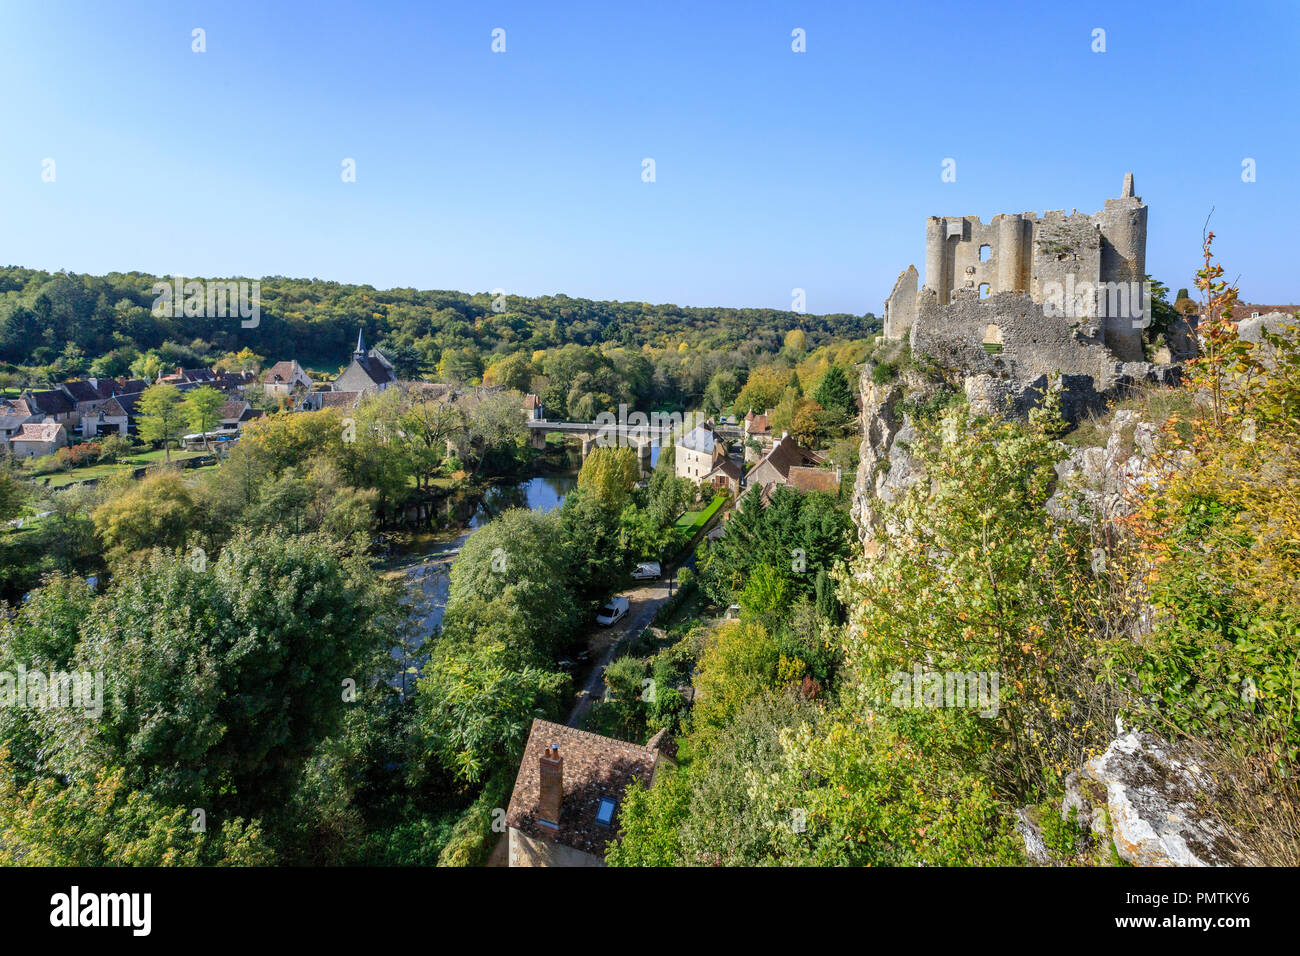 France, Vienne, Angles sur l'Anglin, labelled Les Plus Beaux Villages de France (The Most beautiful Villages of France), ruins of the castle overlooki Stock Photo